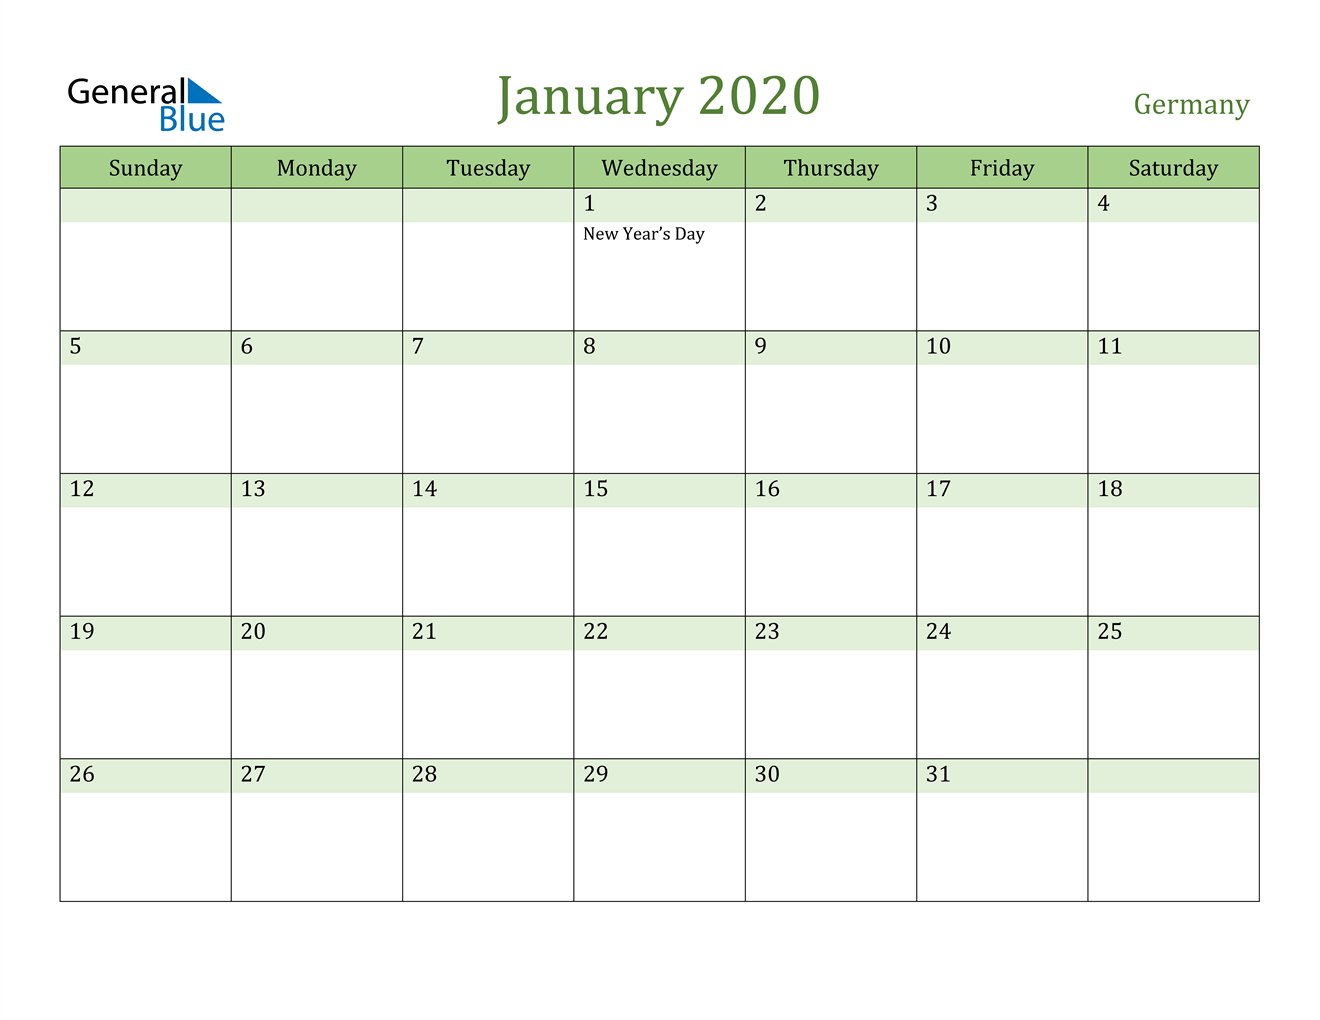 January 2020 Calendar - Germany